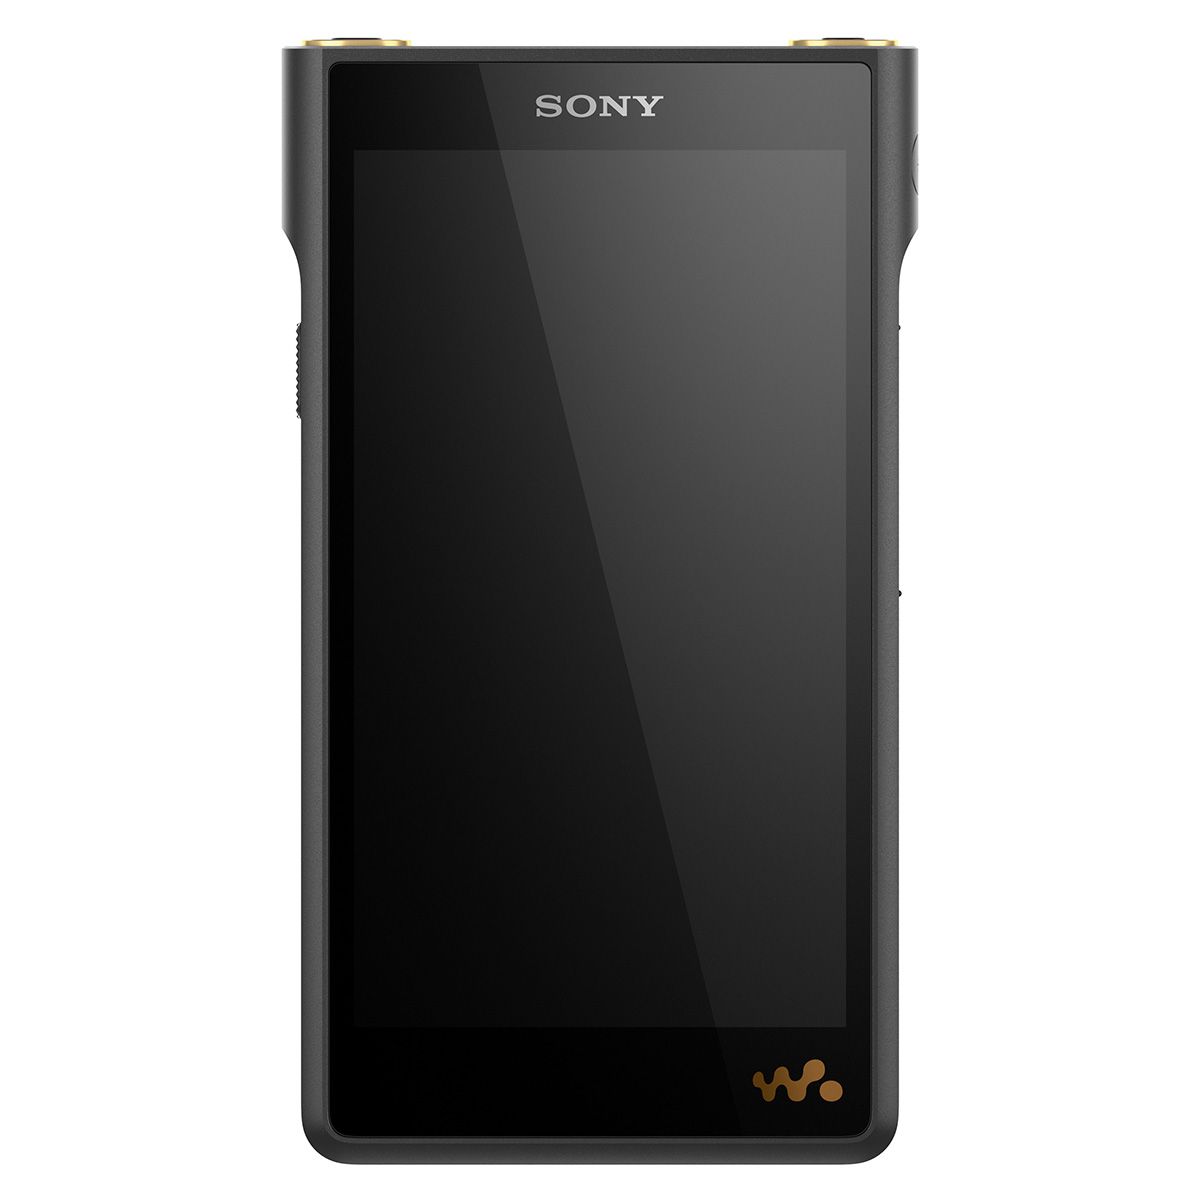 Sony WM1AM2 Walkman Digital Music Player | Audio Advice